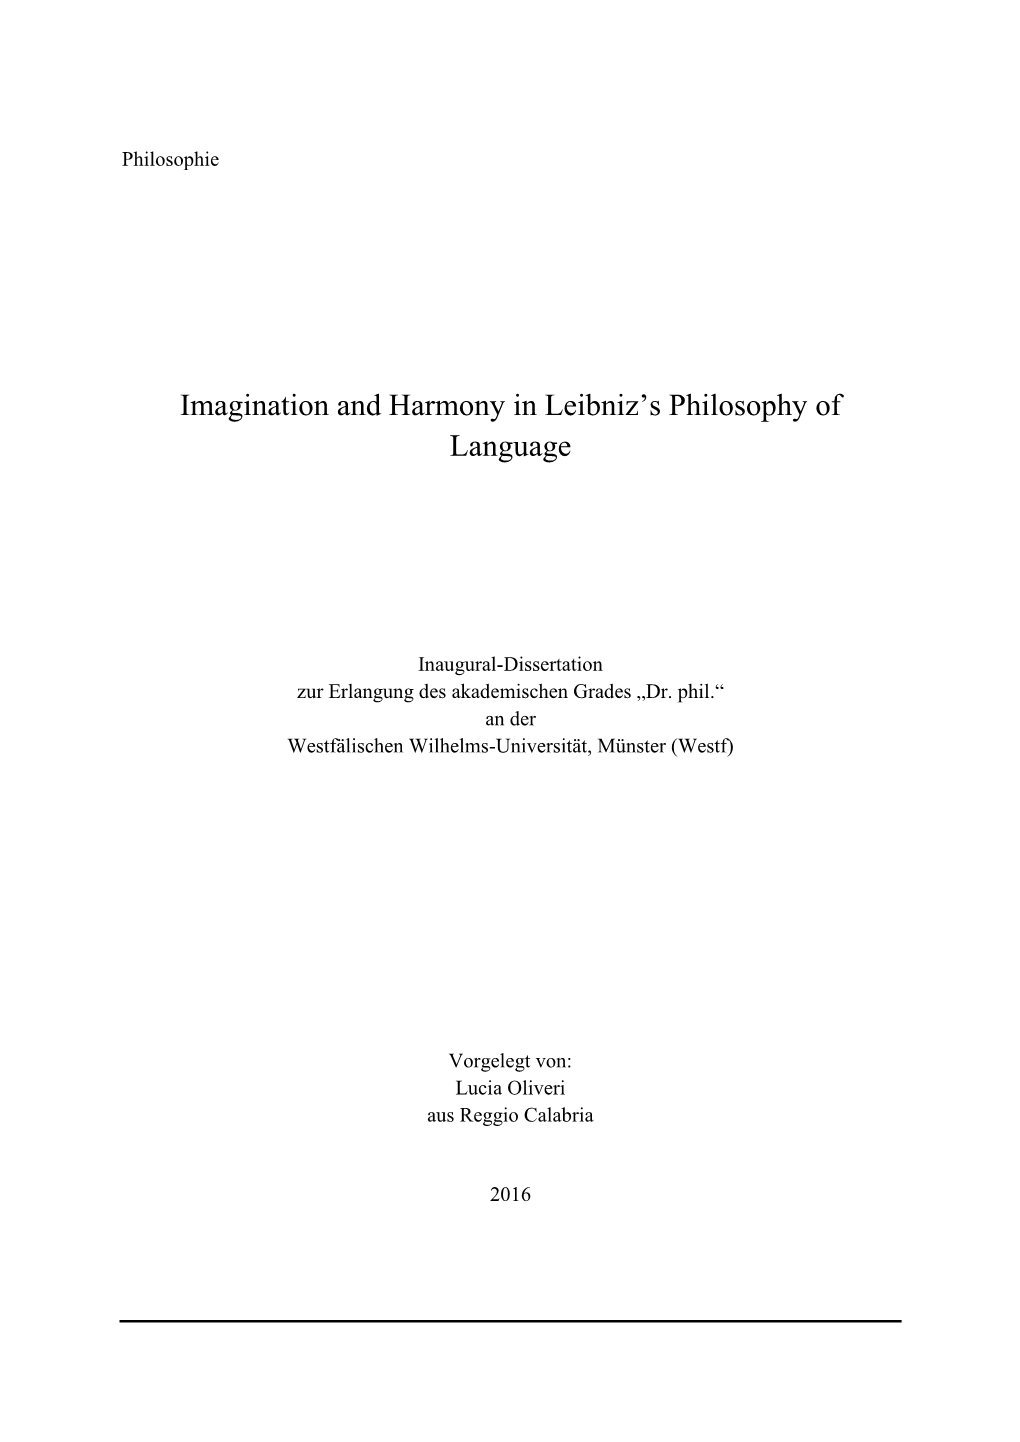 Imagination and Harmony in Leibniz's Philosophy of Language